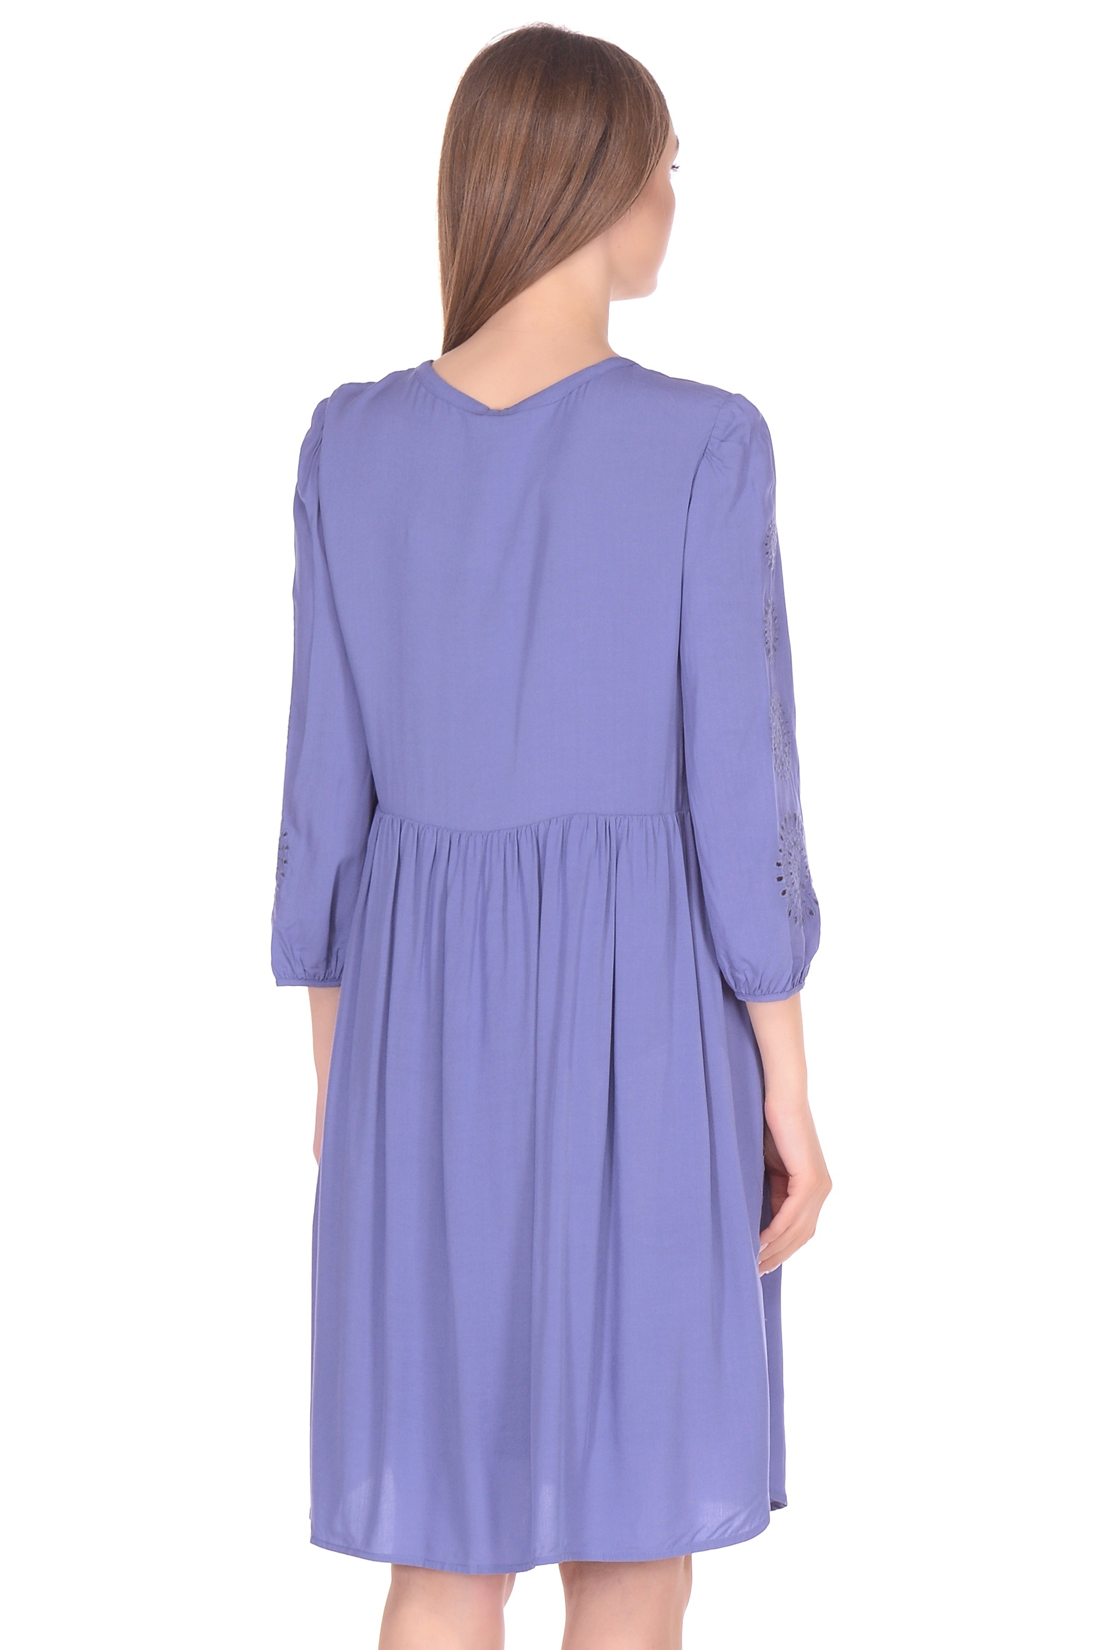 Платье с кружевным узором на рукавах (арт. baon B458096), размер S, цвет синий Платье с кружевным узором на рукавах (арт. baon B458096) - фото 2